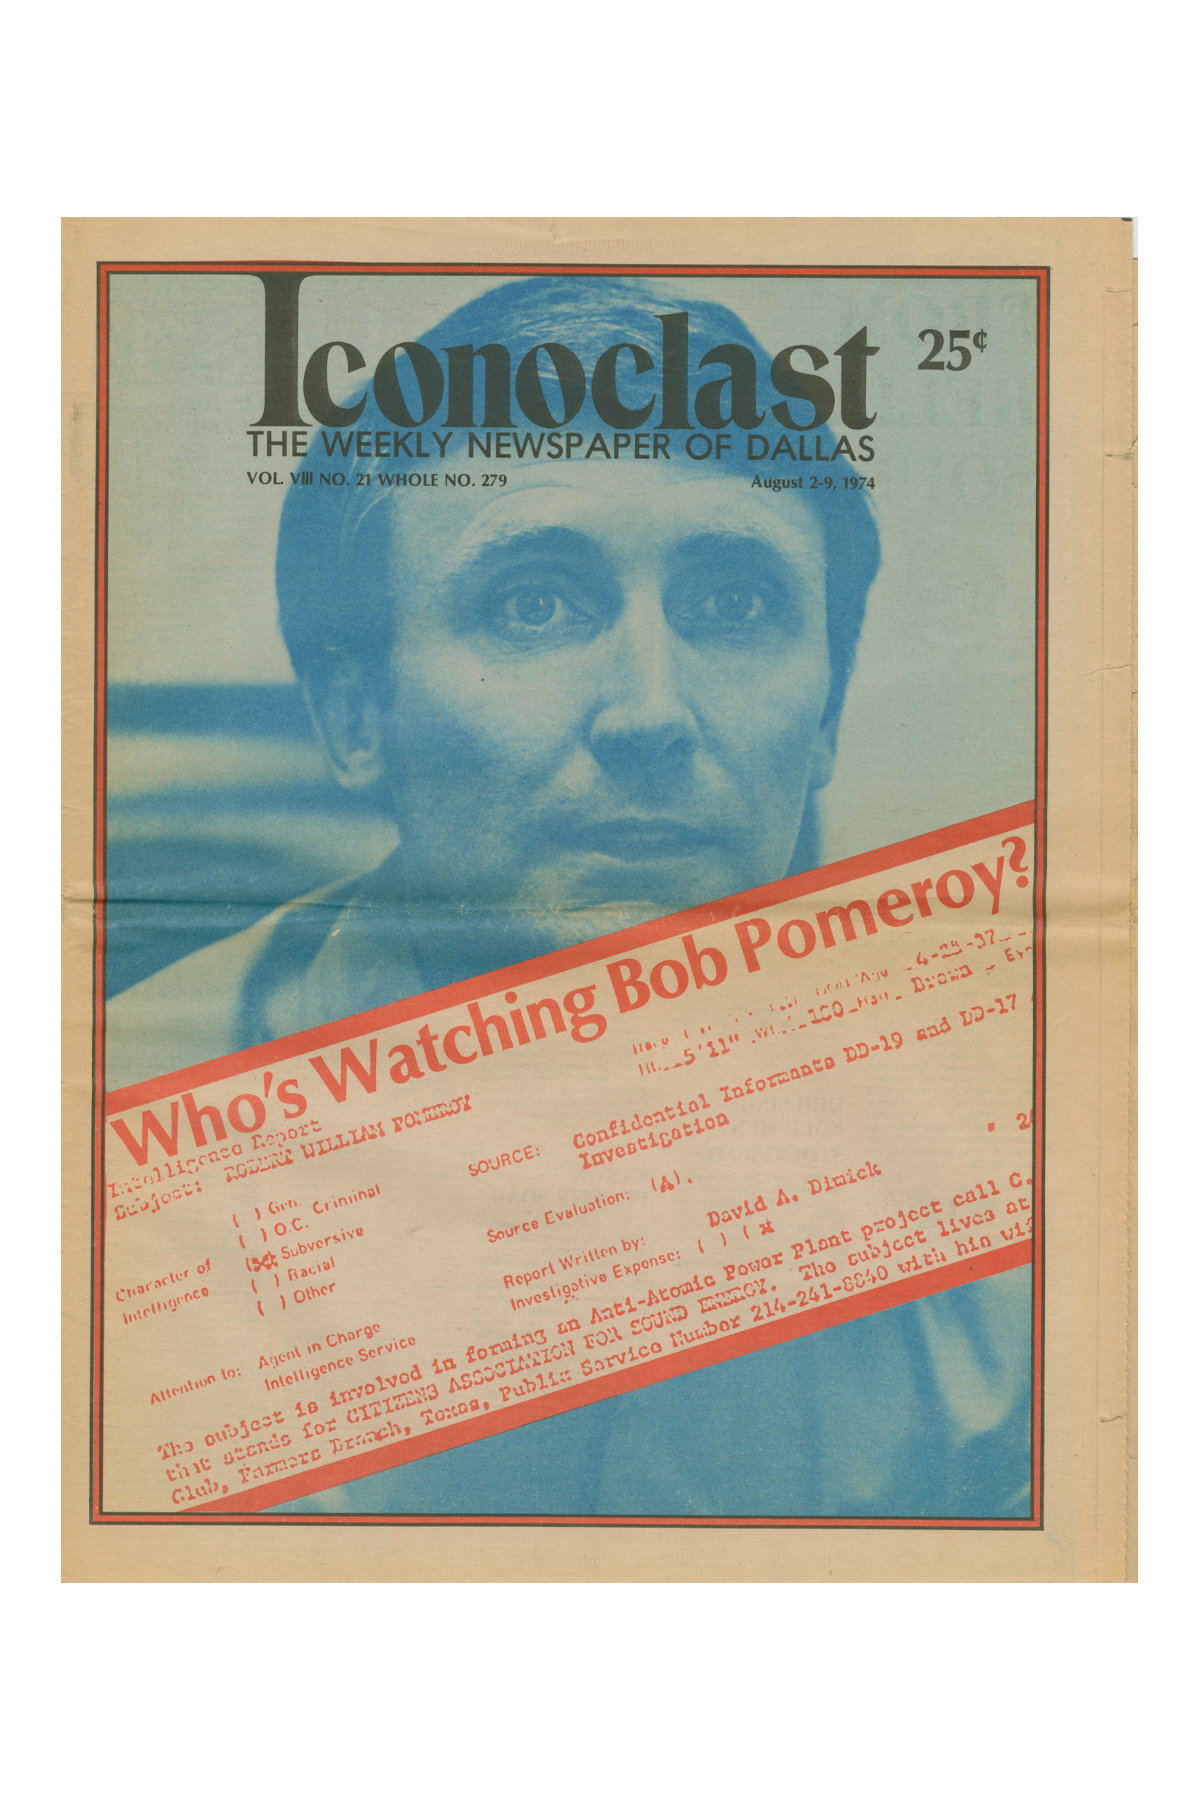 Iconoclast magazine